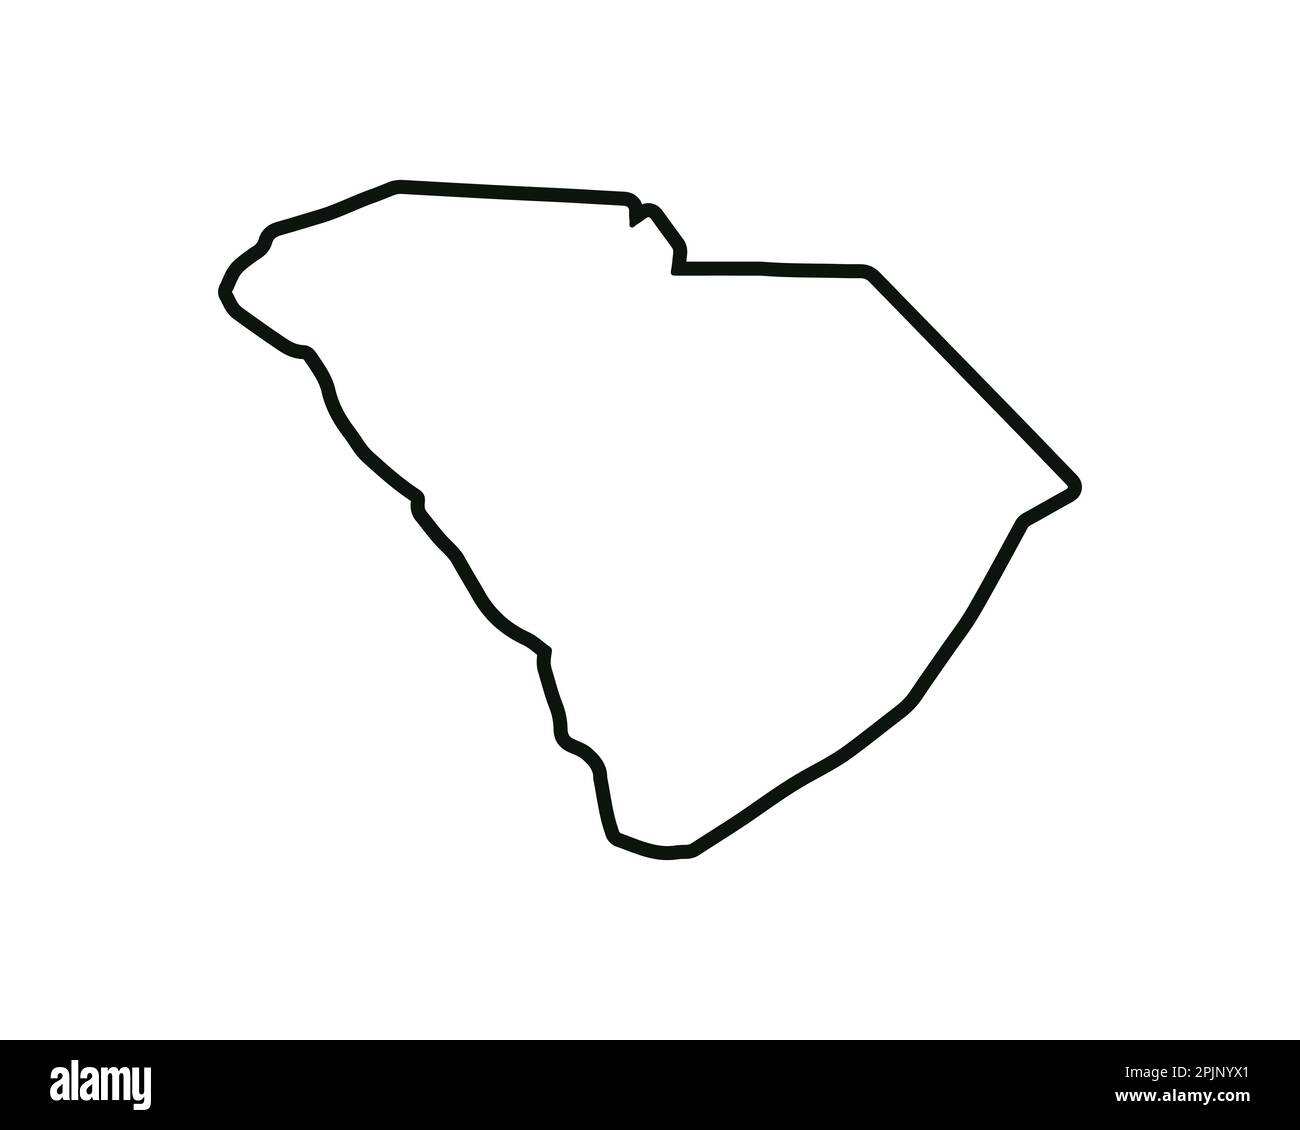 Karte des Bundesstaates South Carolina. US-Bundeslandkarte. South Carolina Umriss-Symbol. Vektorgrafik Stock Vektor